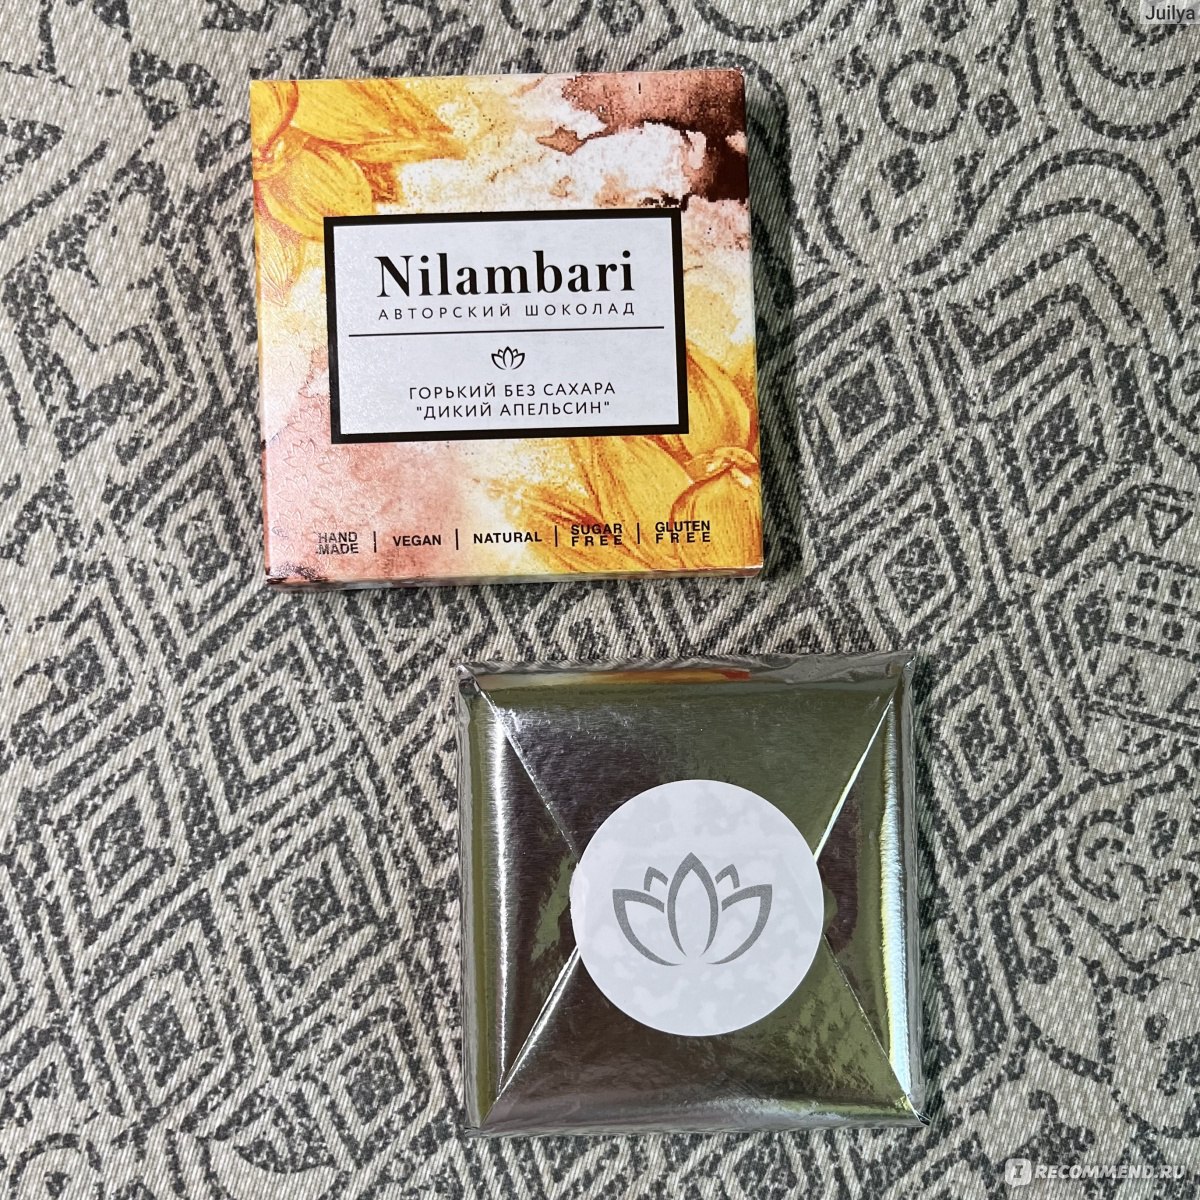 Горький шоколад Nilambari "Дикий апельсин" без сахара фото